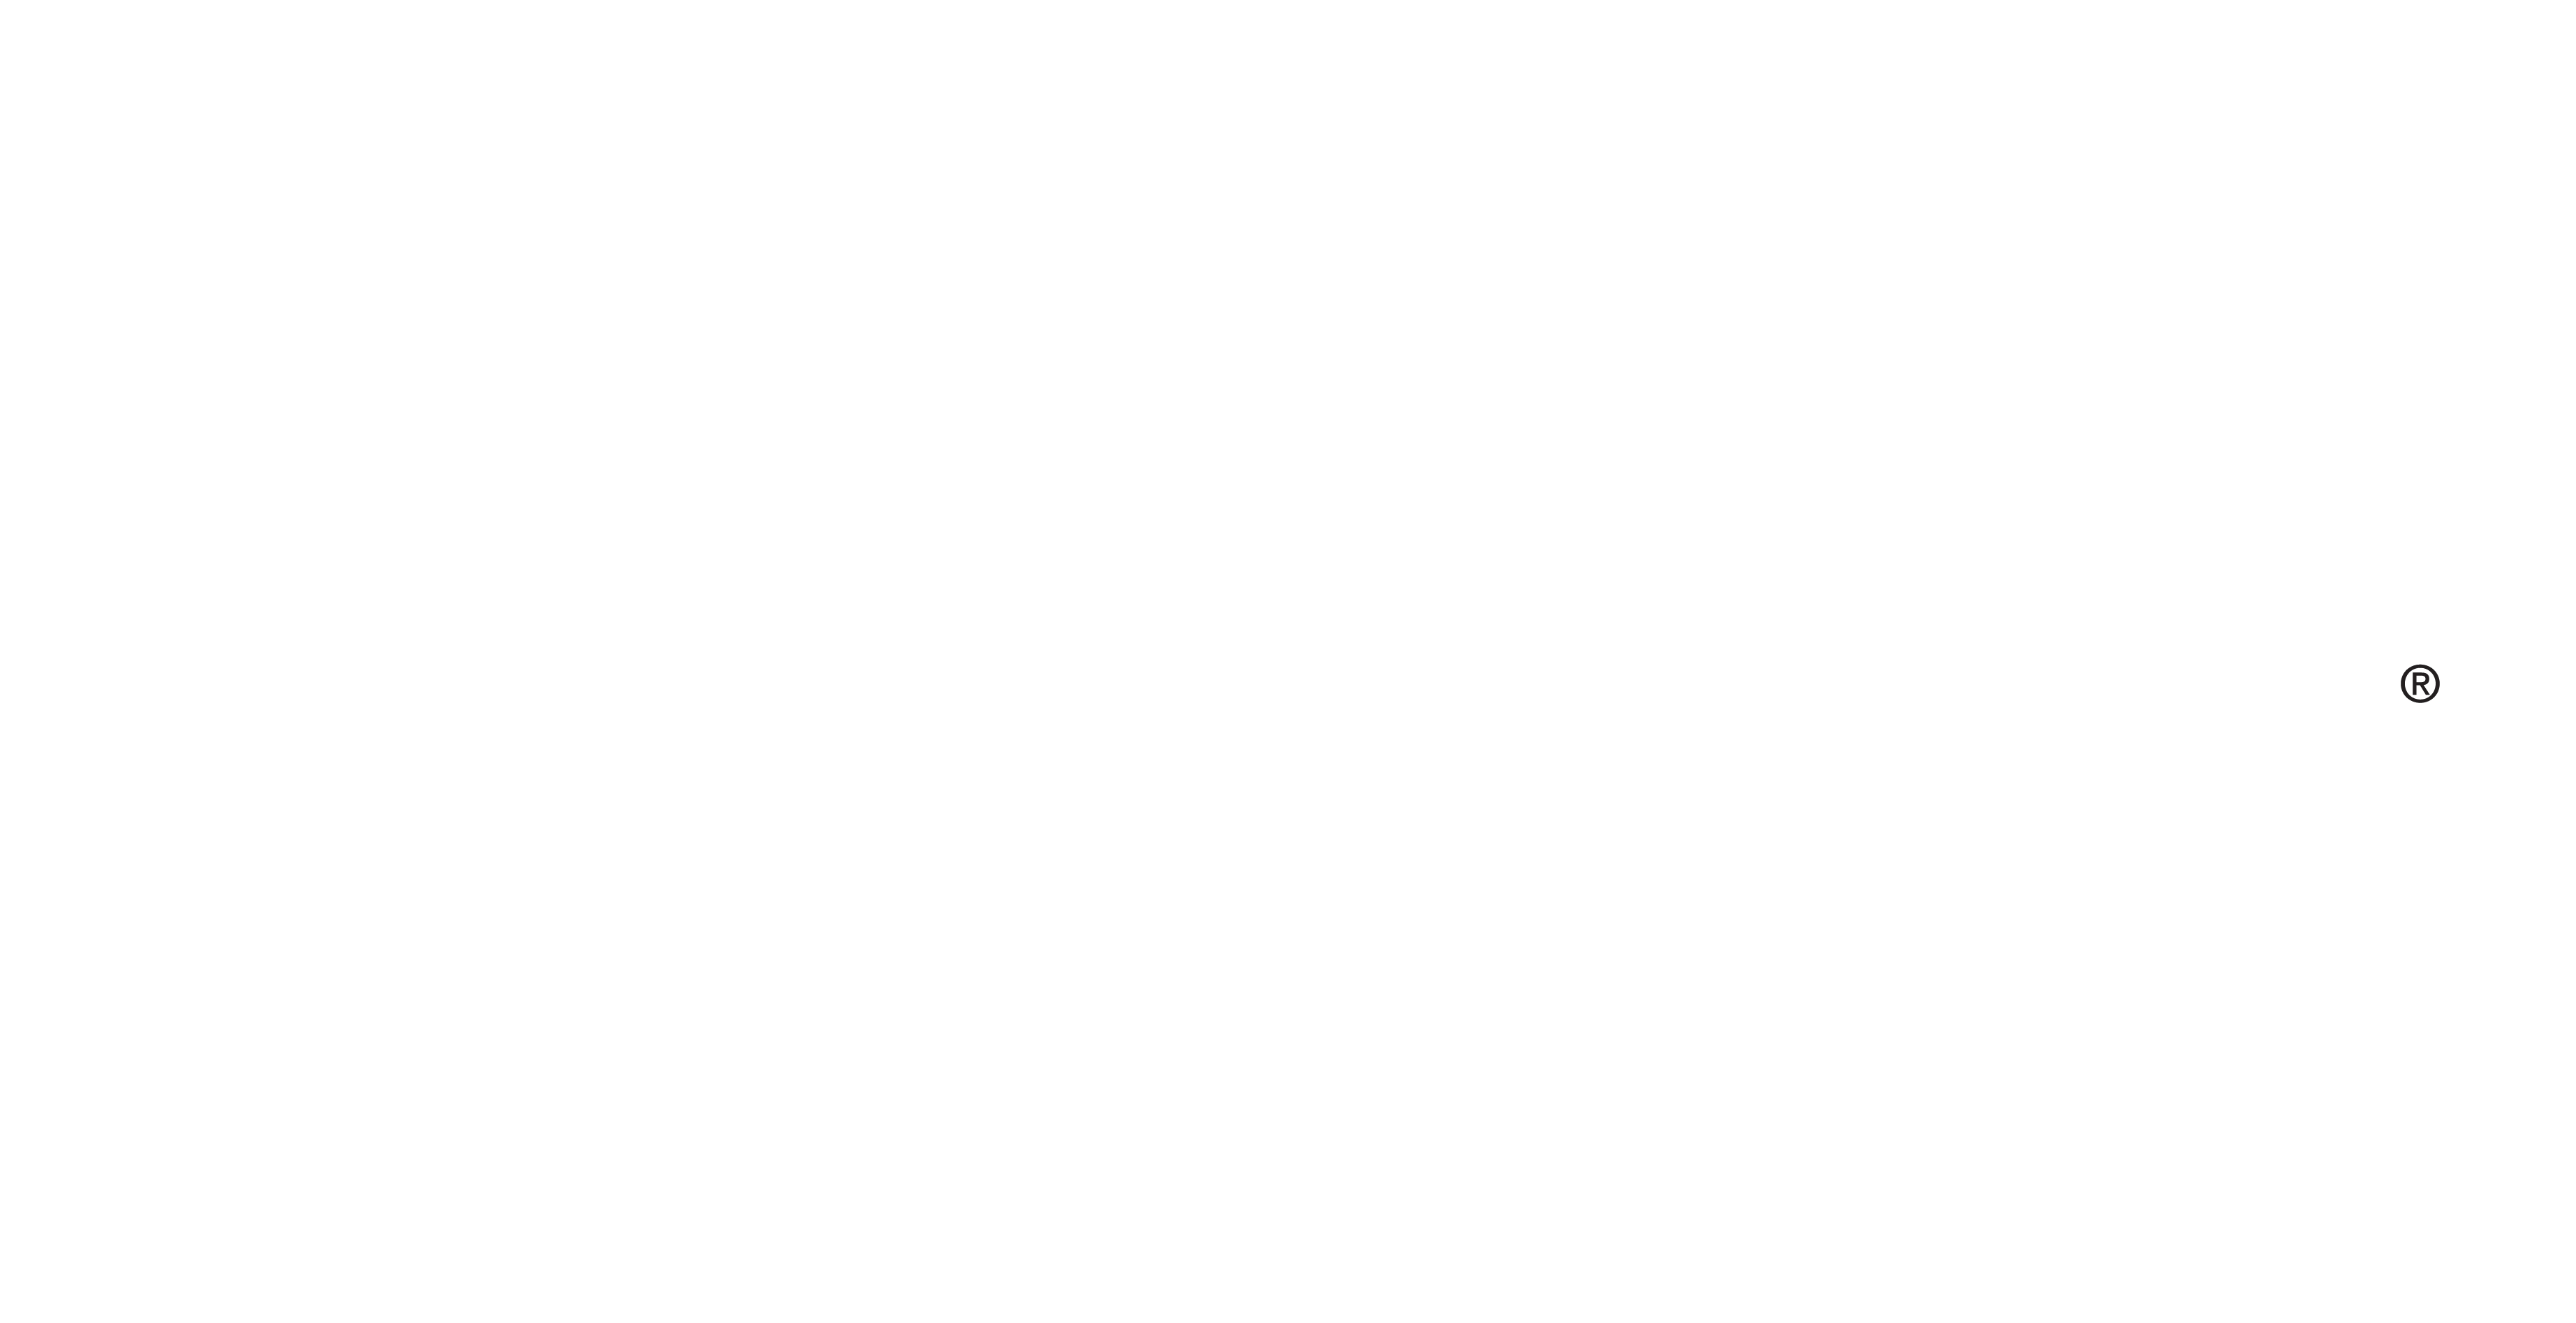 Alamo Beer Hall logo scroll